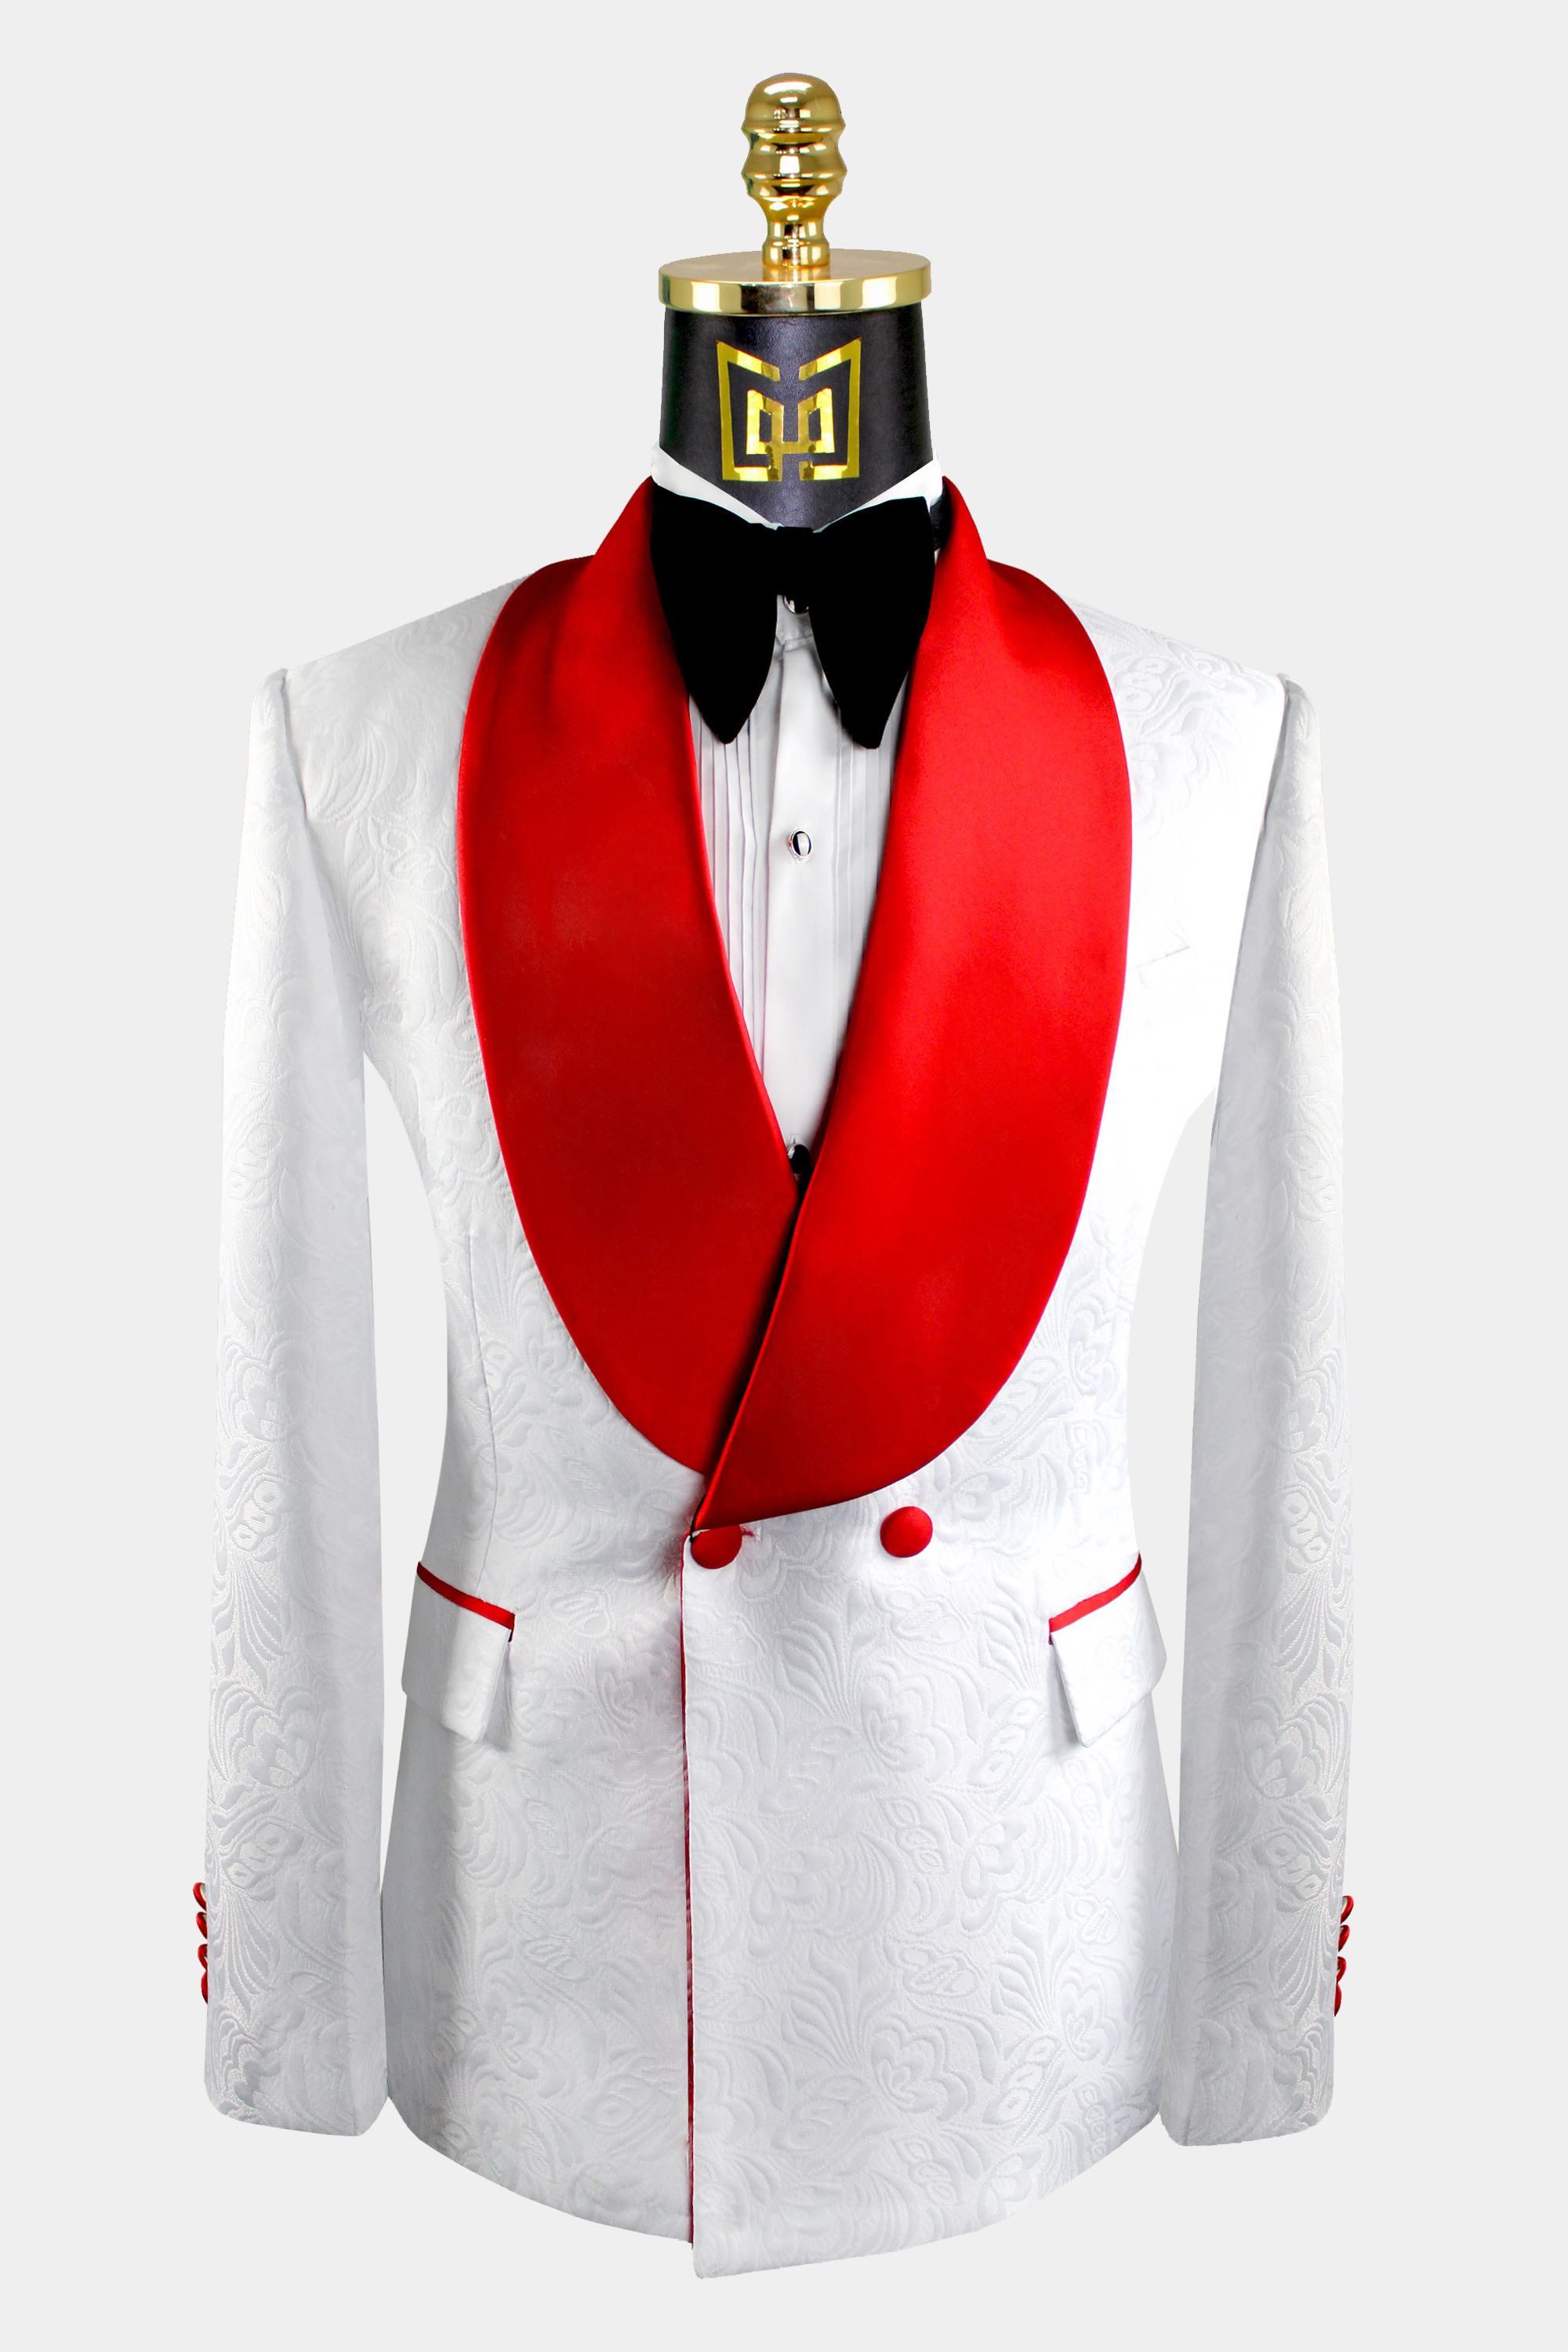 HOT Red Jacket Black Lapel Men's Wedding Suits Prom Groomsman Tuxedo Custom NEW 